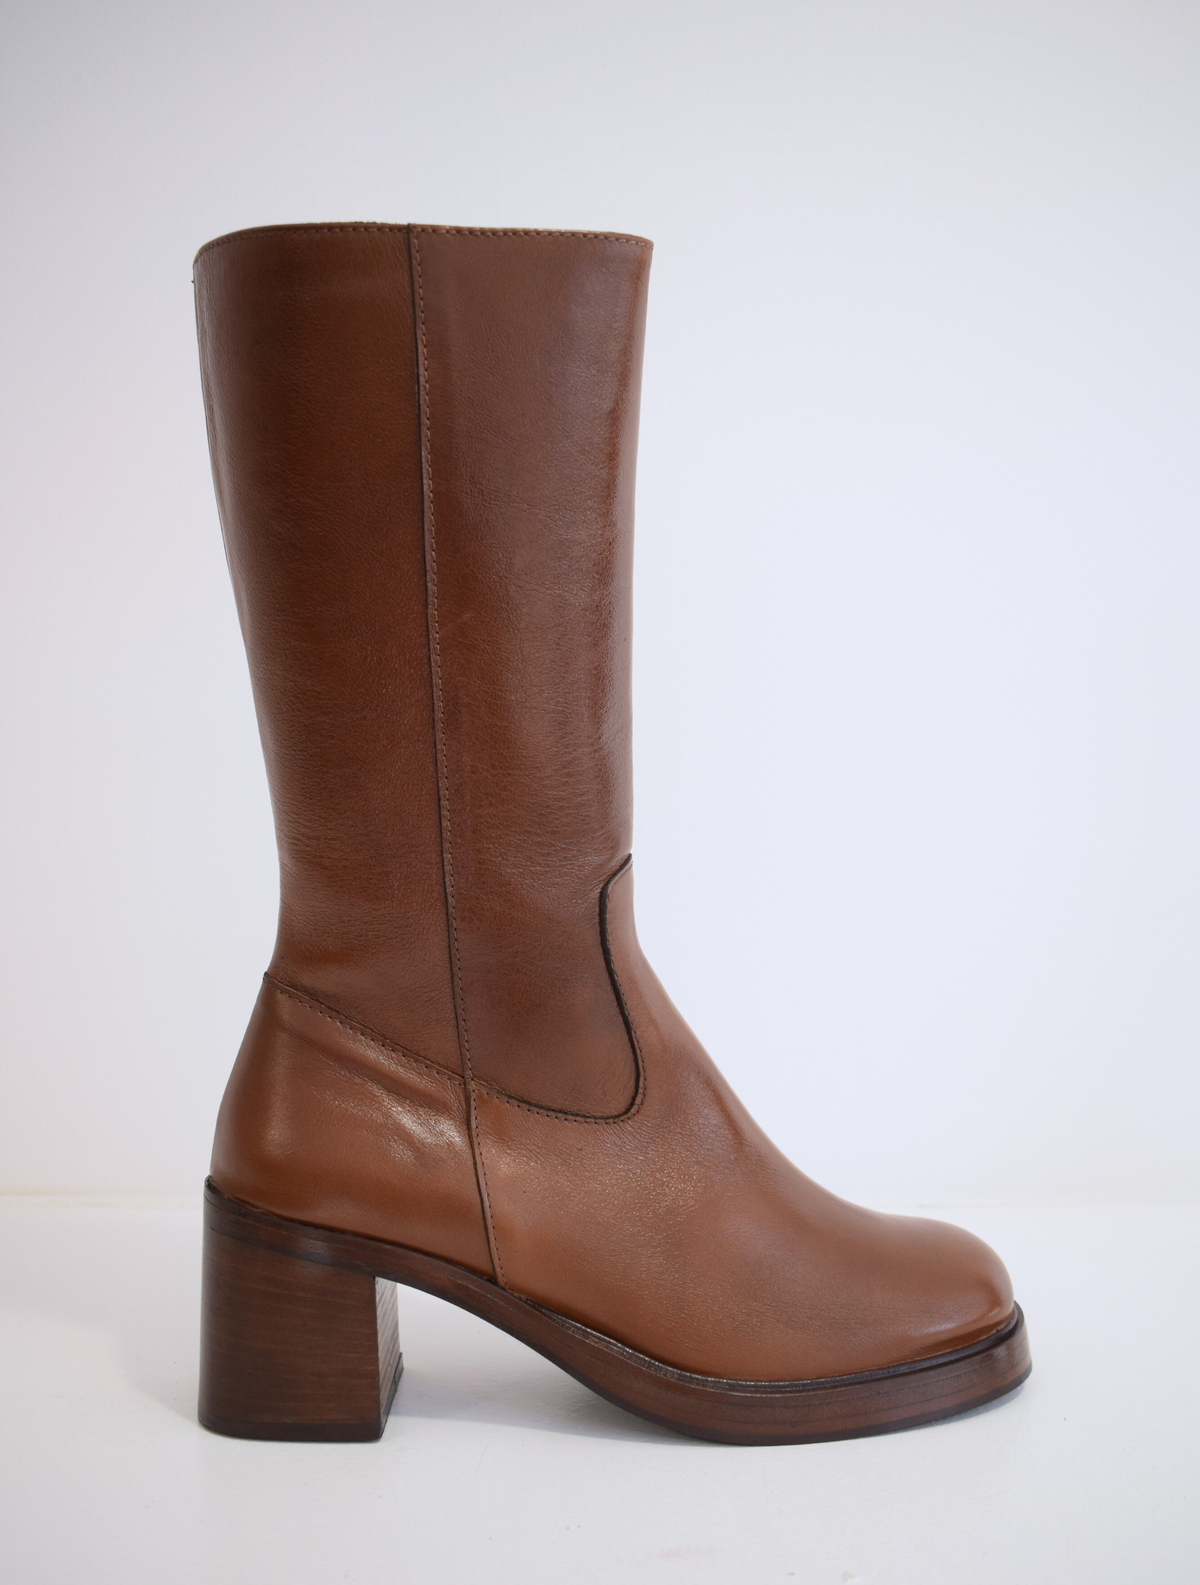 Chestnut brown medium length boot with round toe woodne block heel and wooden platform sole with inner zip fastening